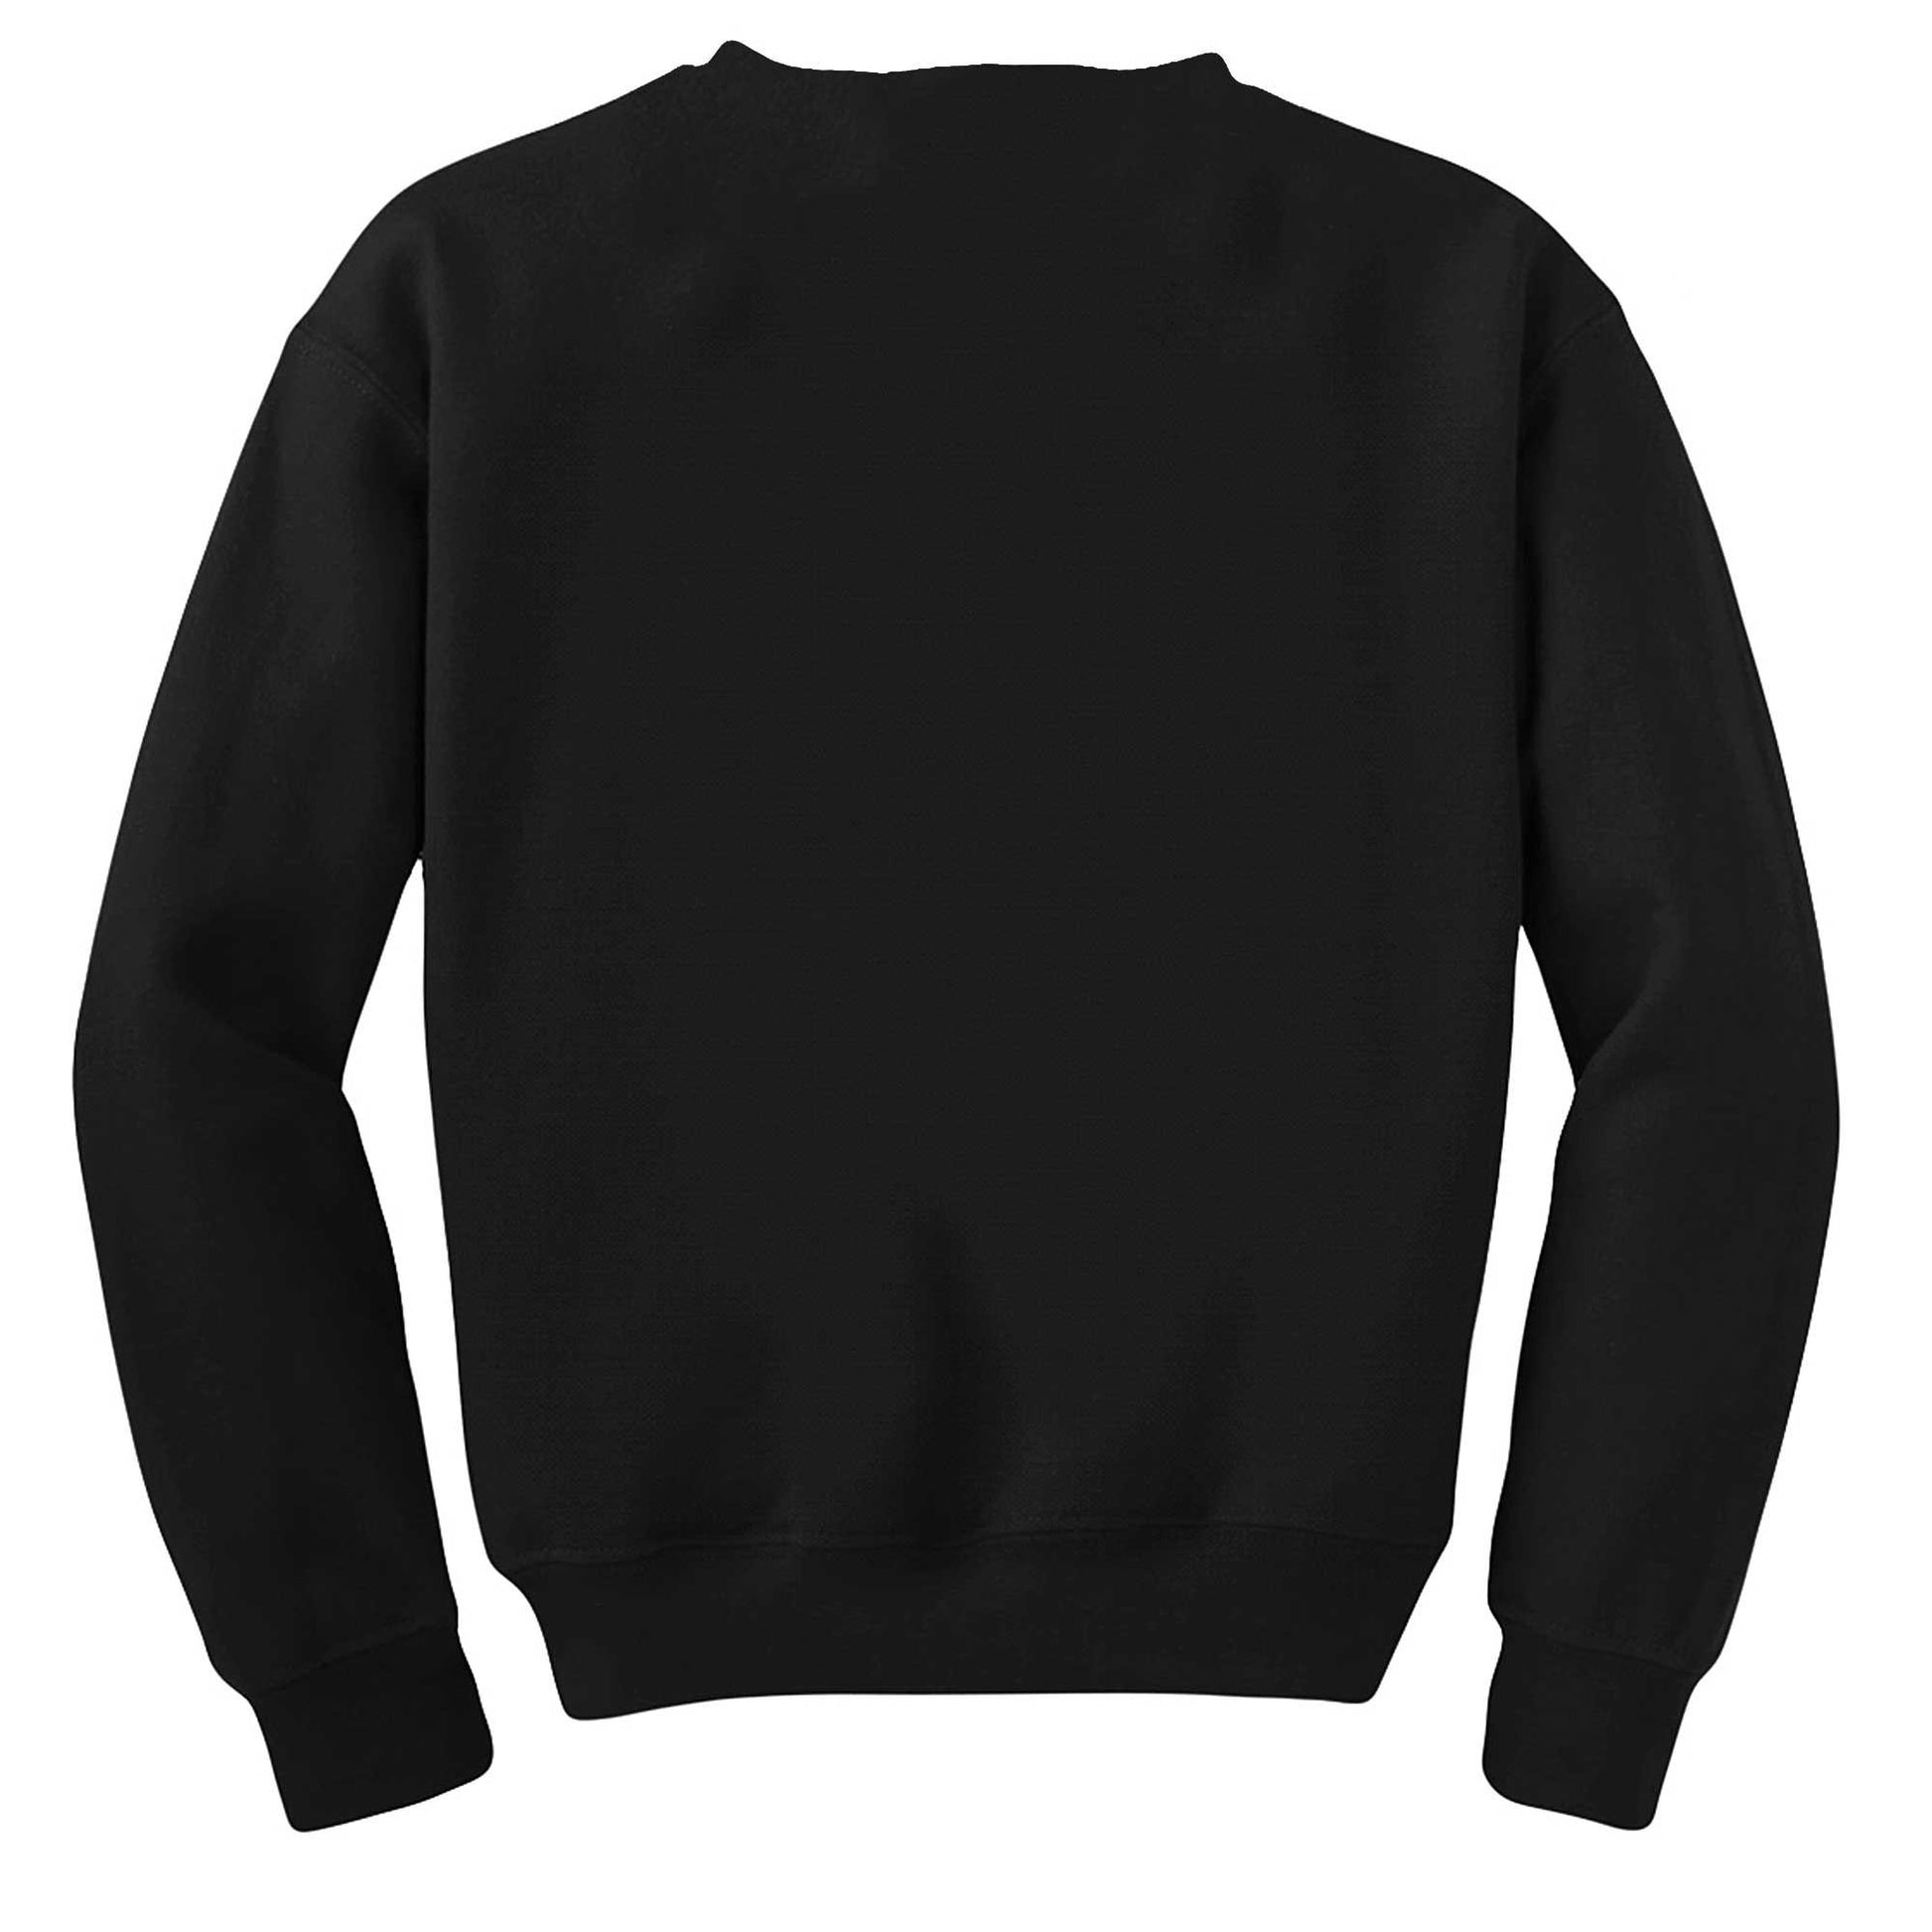 Michael Jordan Black Siyah Sweatshirt - Zepplingiyim